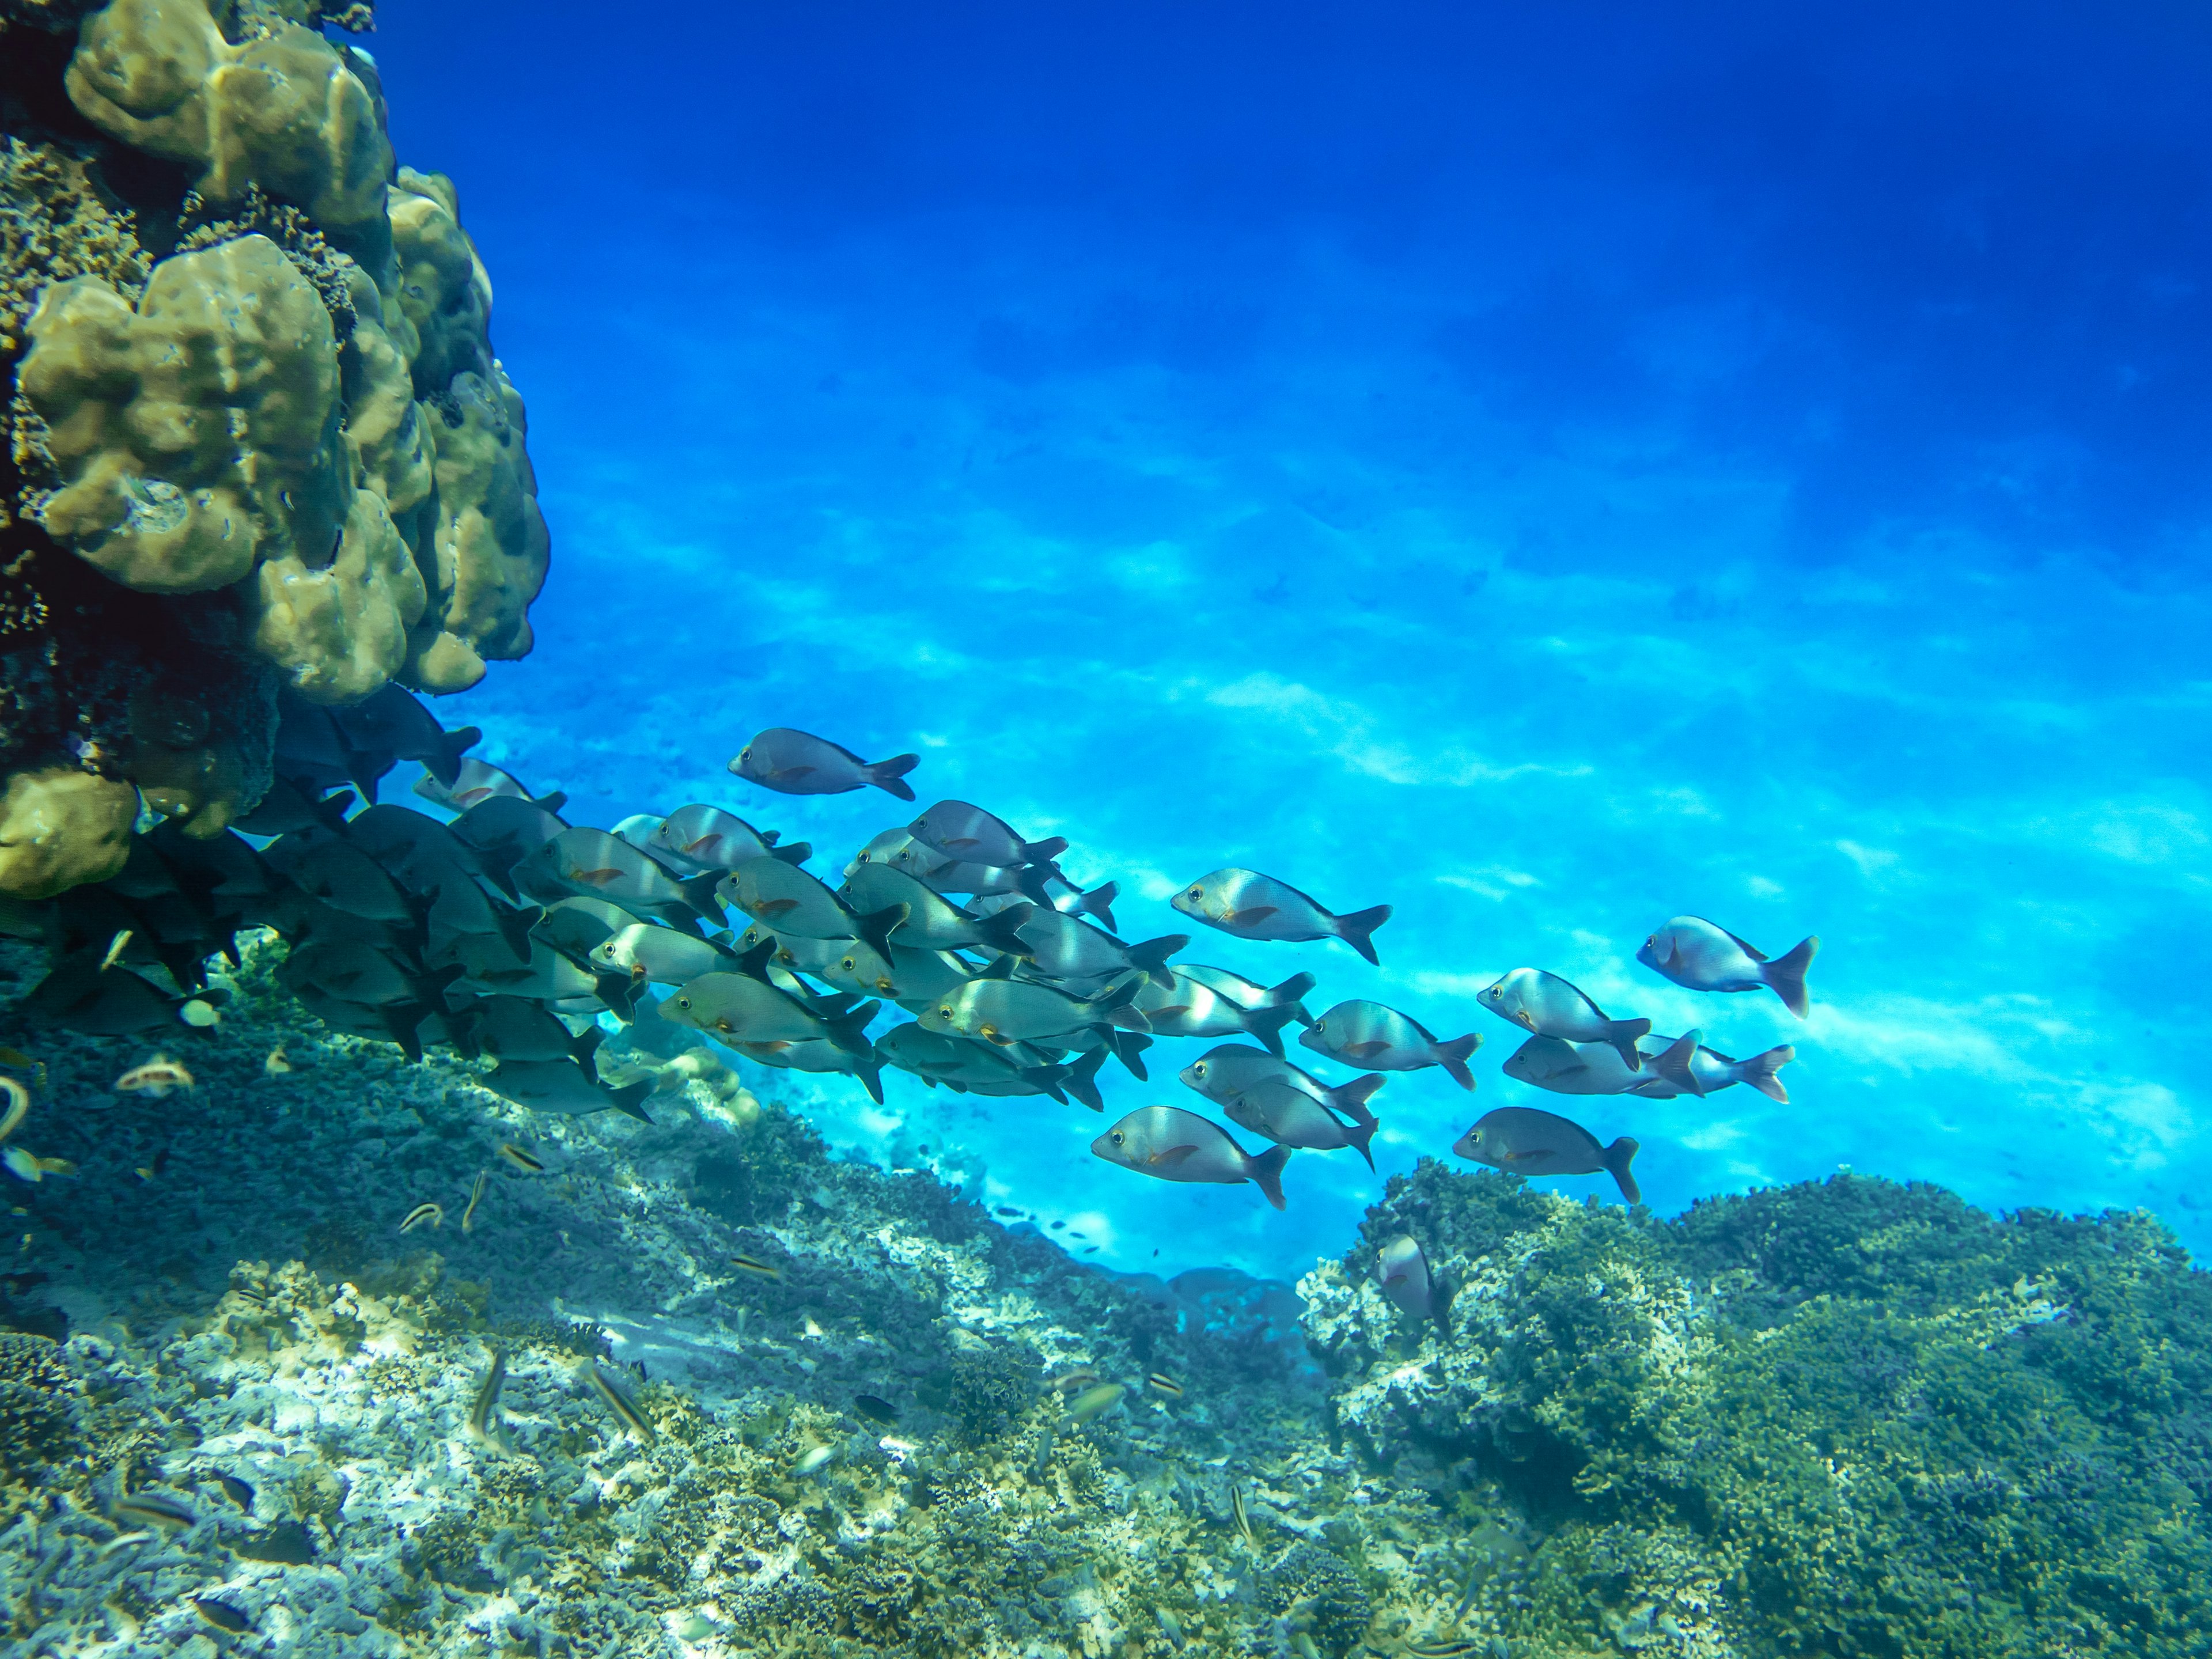 a school of fish near a coral outcrop